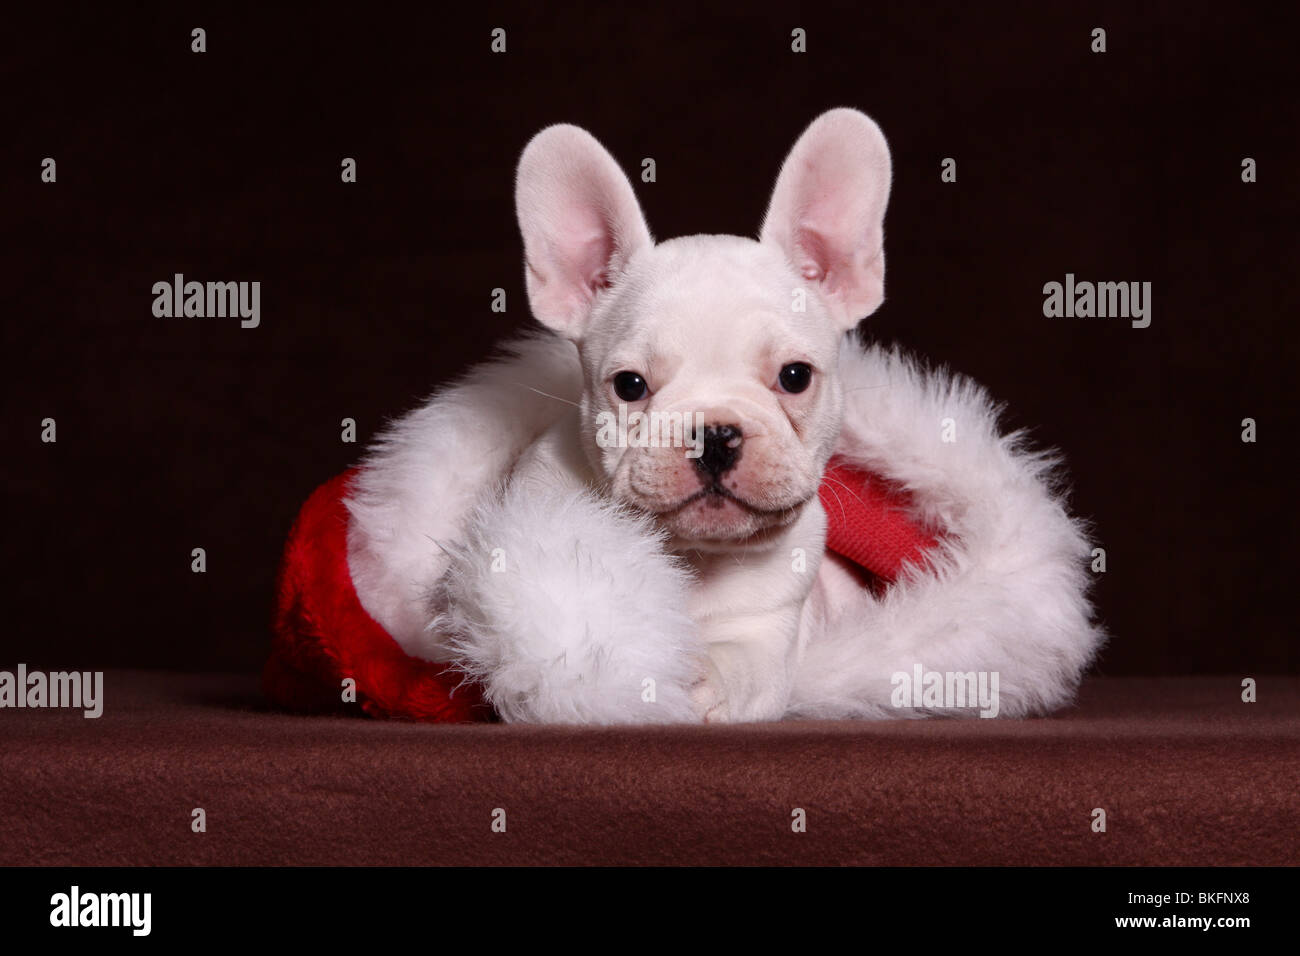 Französische Bulldogge Welpe / French Bulldog Puppy Stock Photo